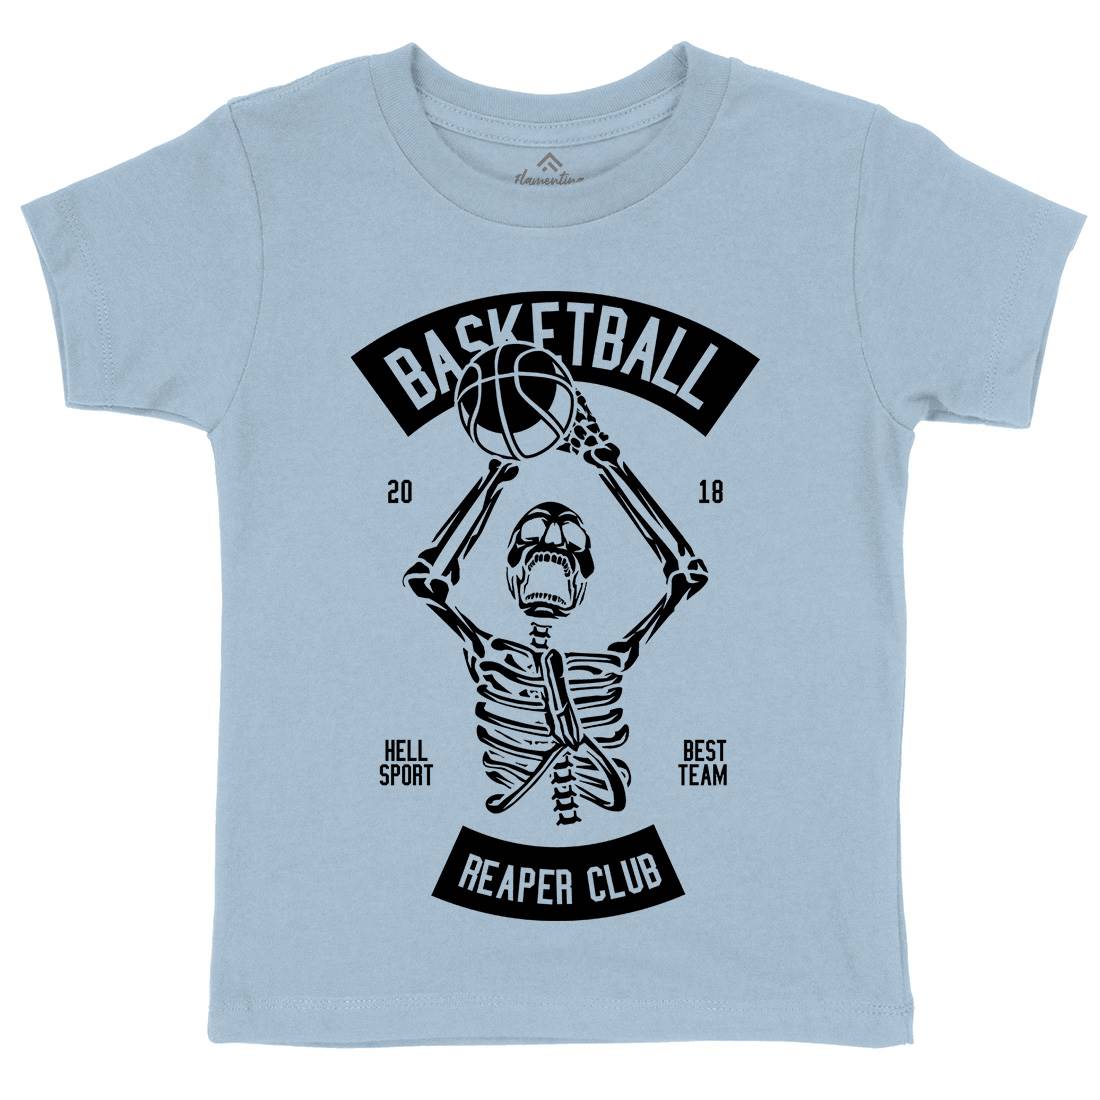 Basketball Reaper Club Kids Crew Neck T-Shirt Sport B491